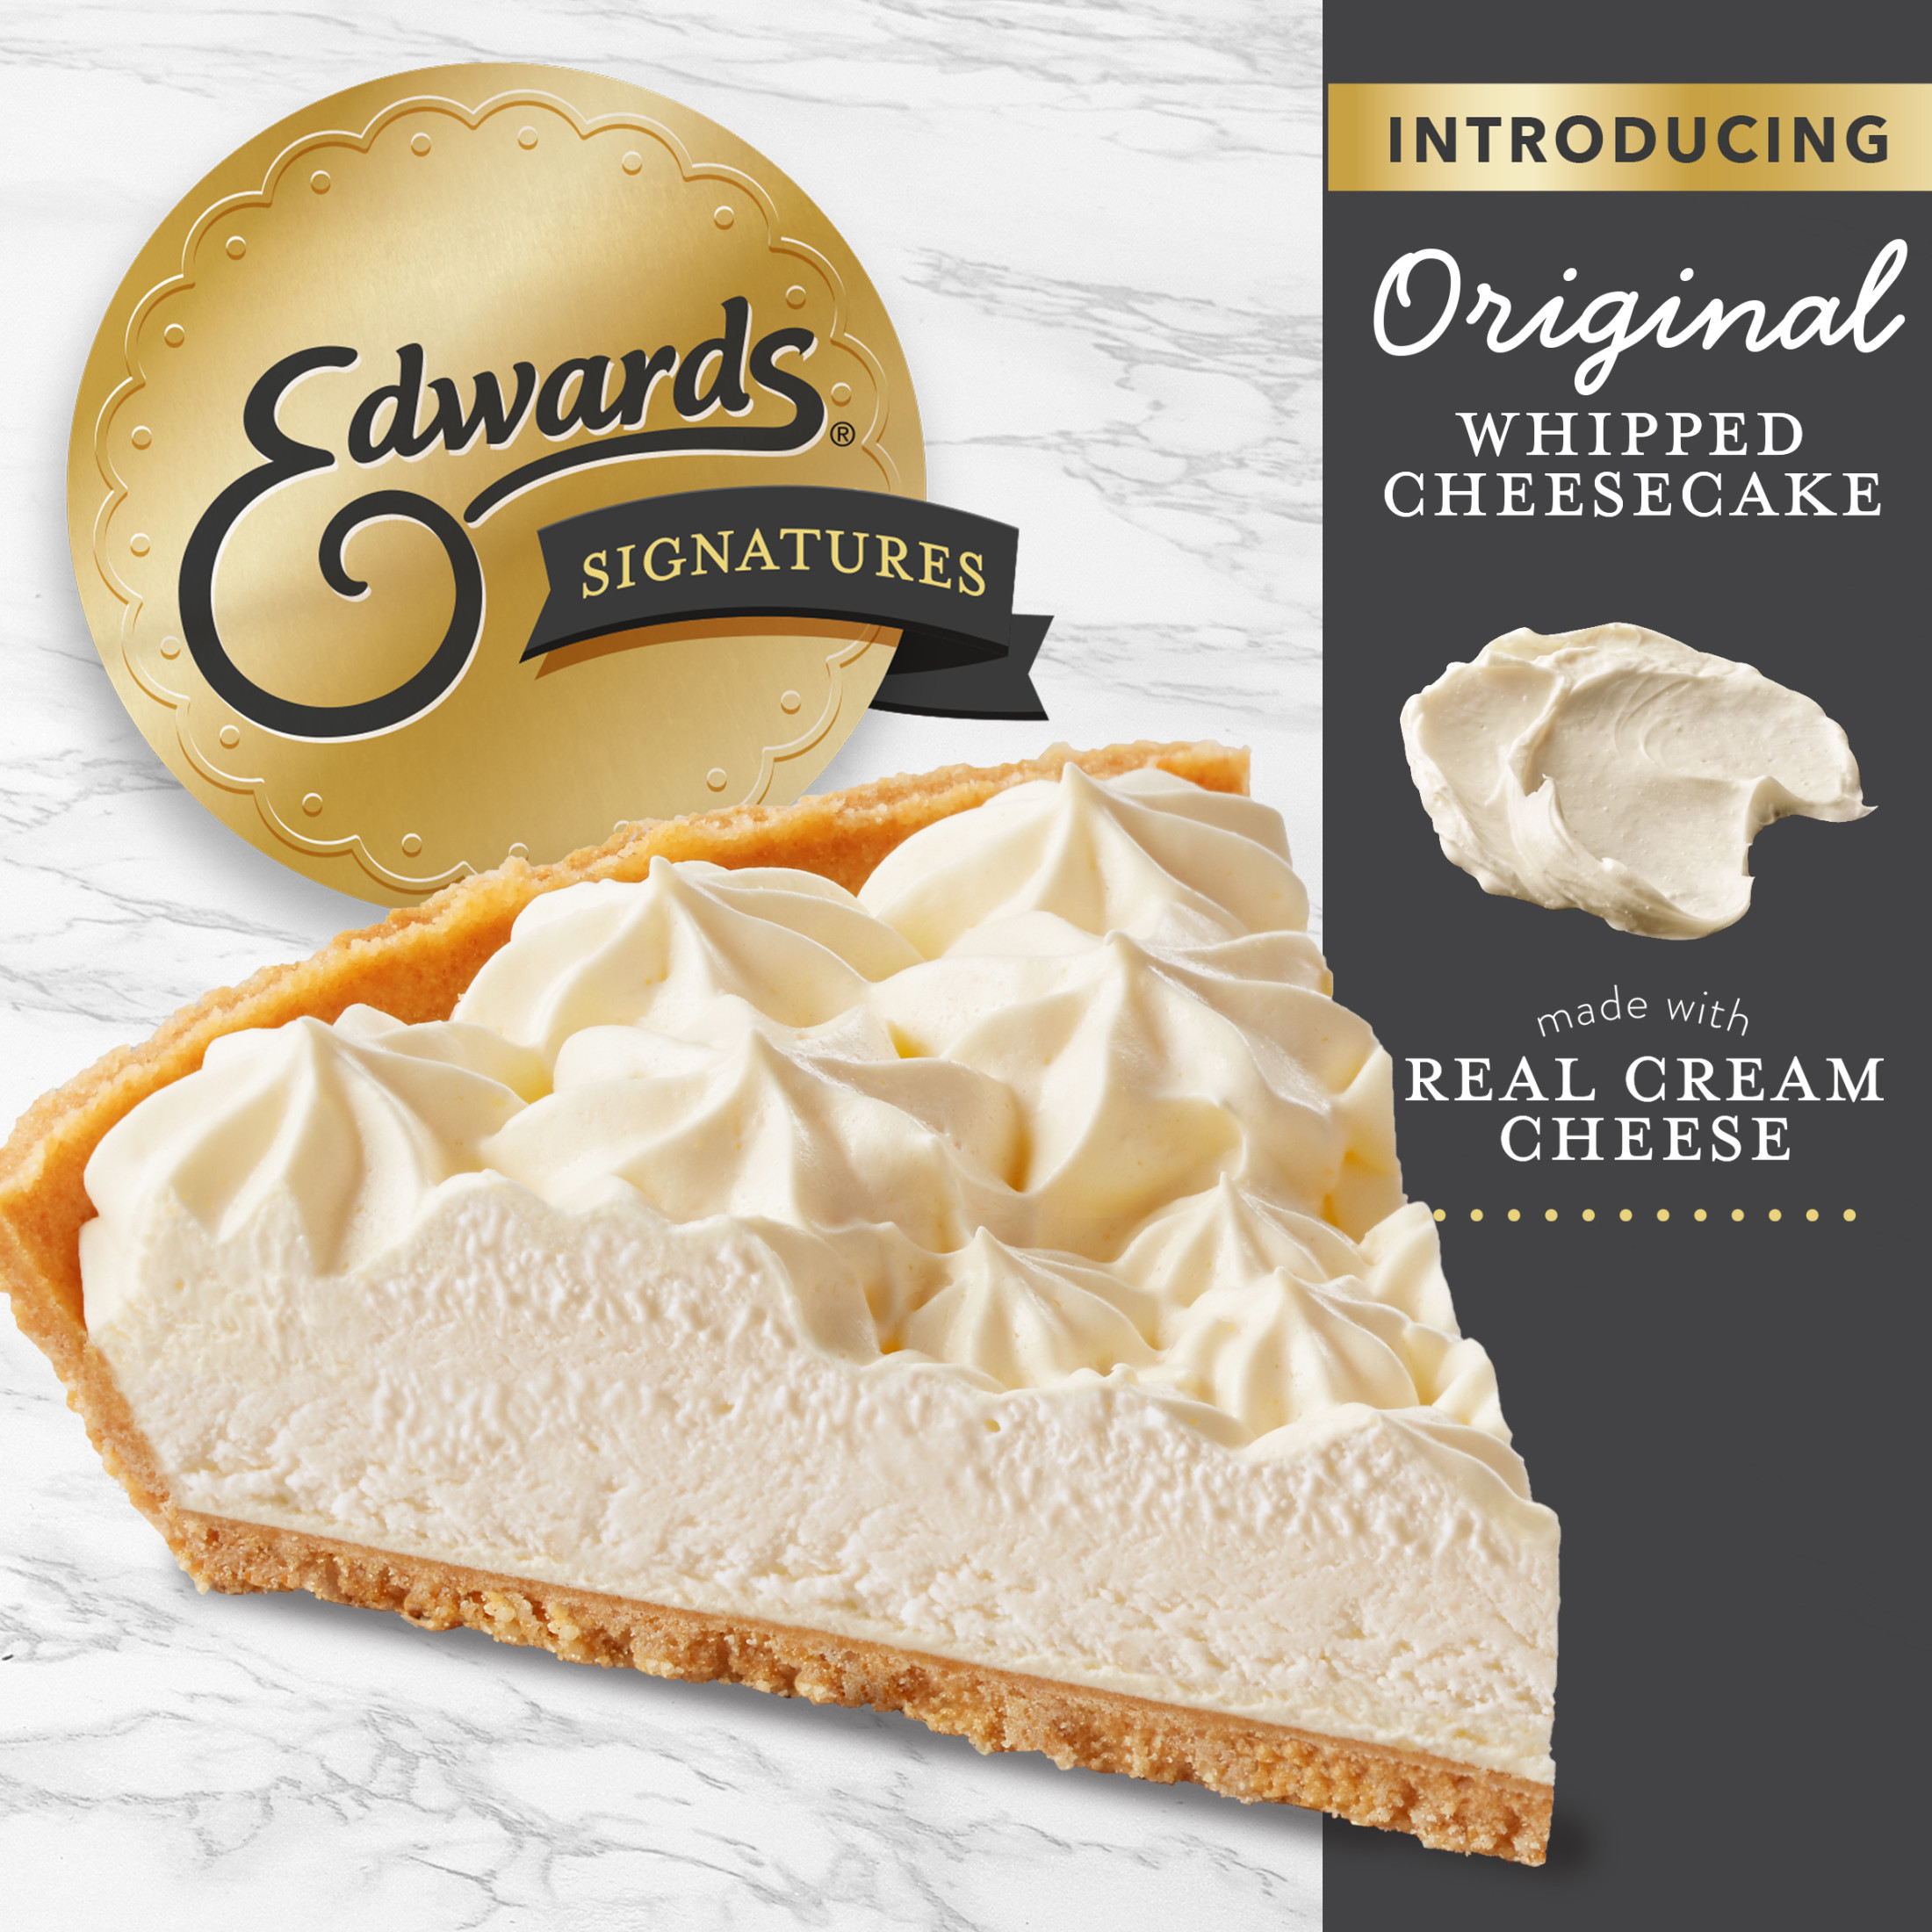 Edwards Signature Cheese Cake Desserts Original Whipped Cheesecake, 24.0 oz - image 1 of 12